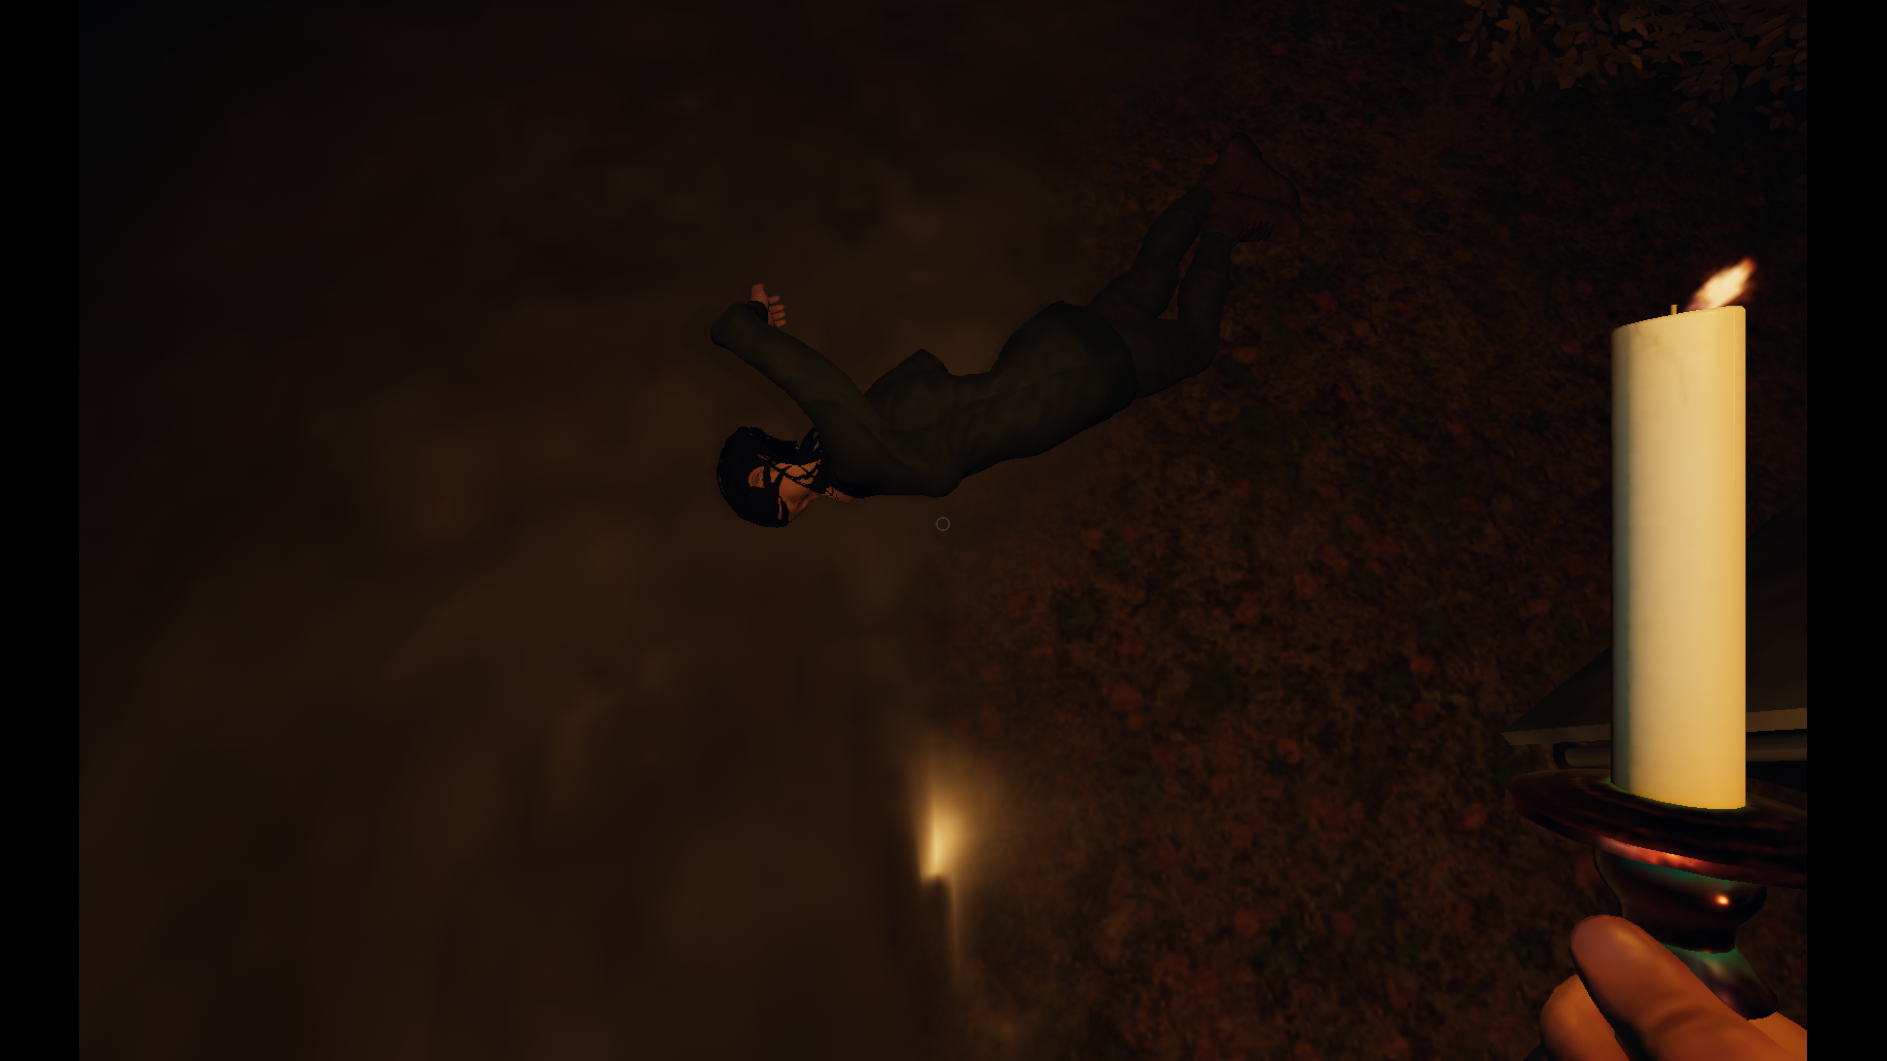 A player's dead body